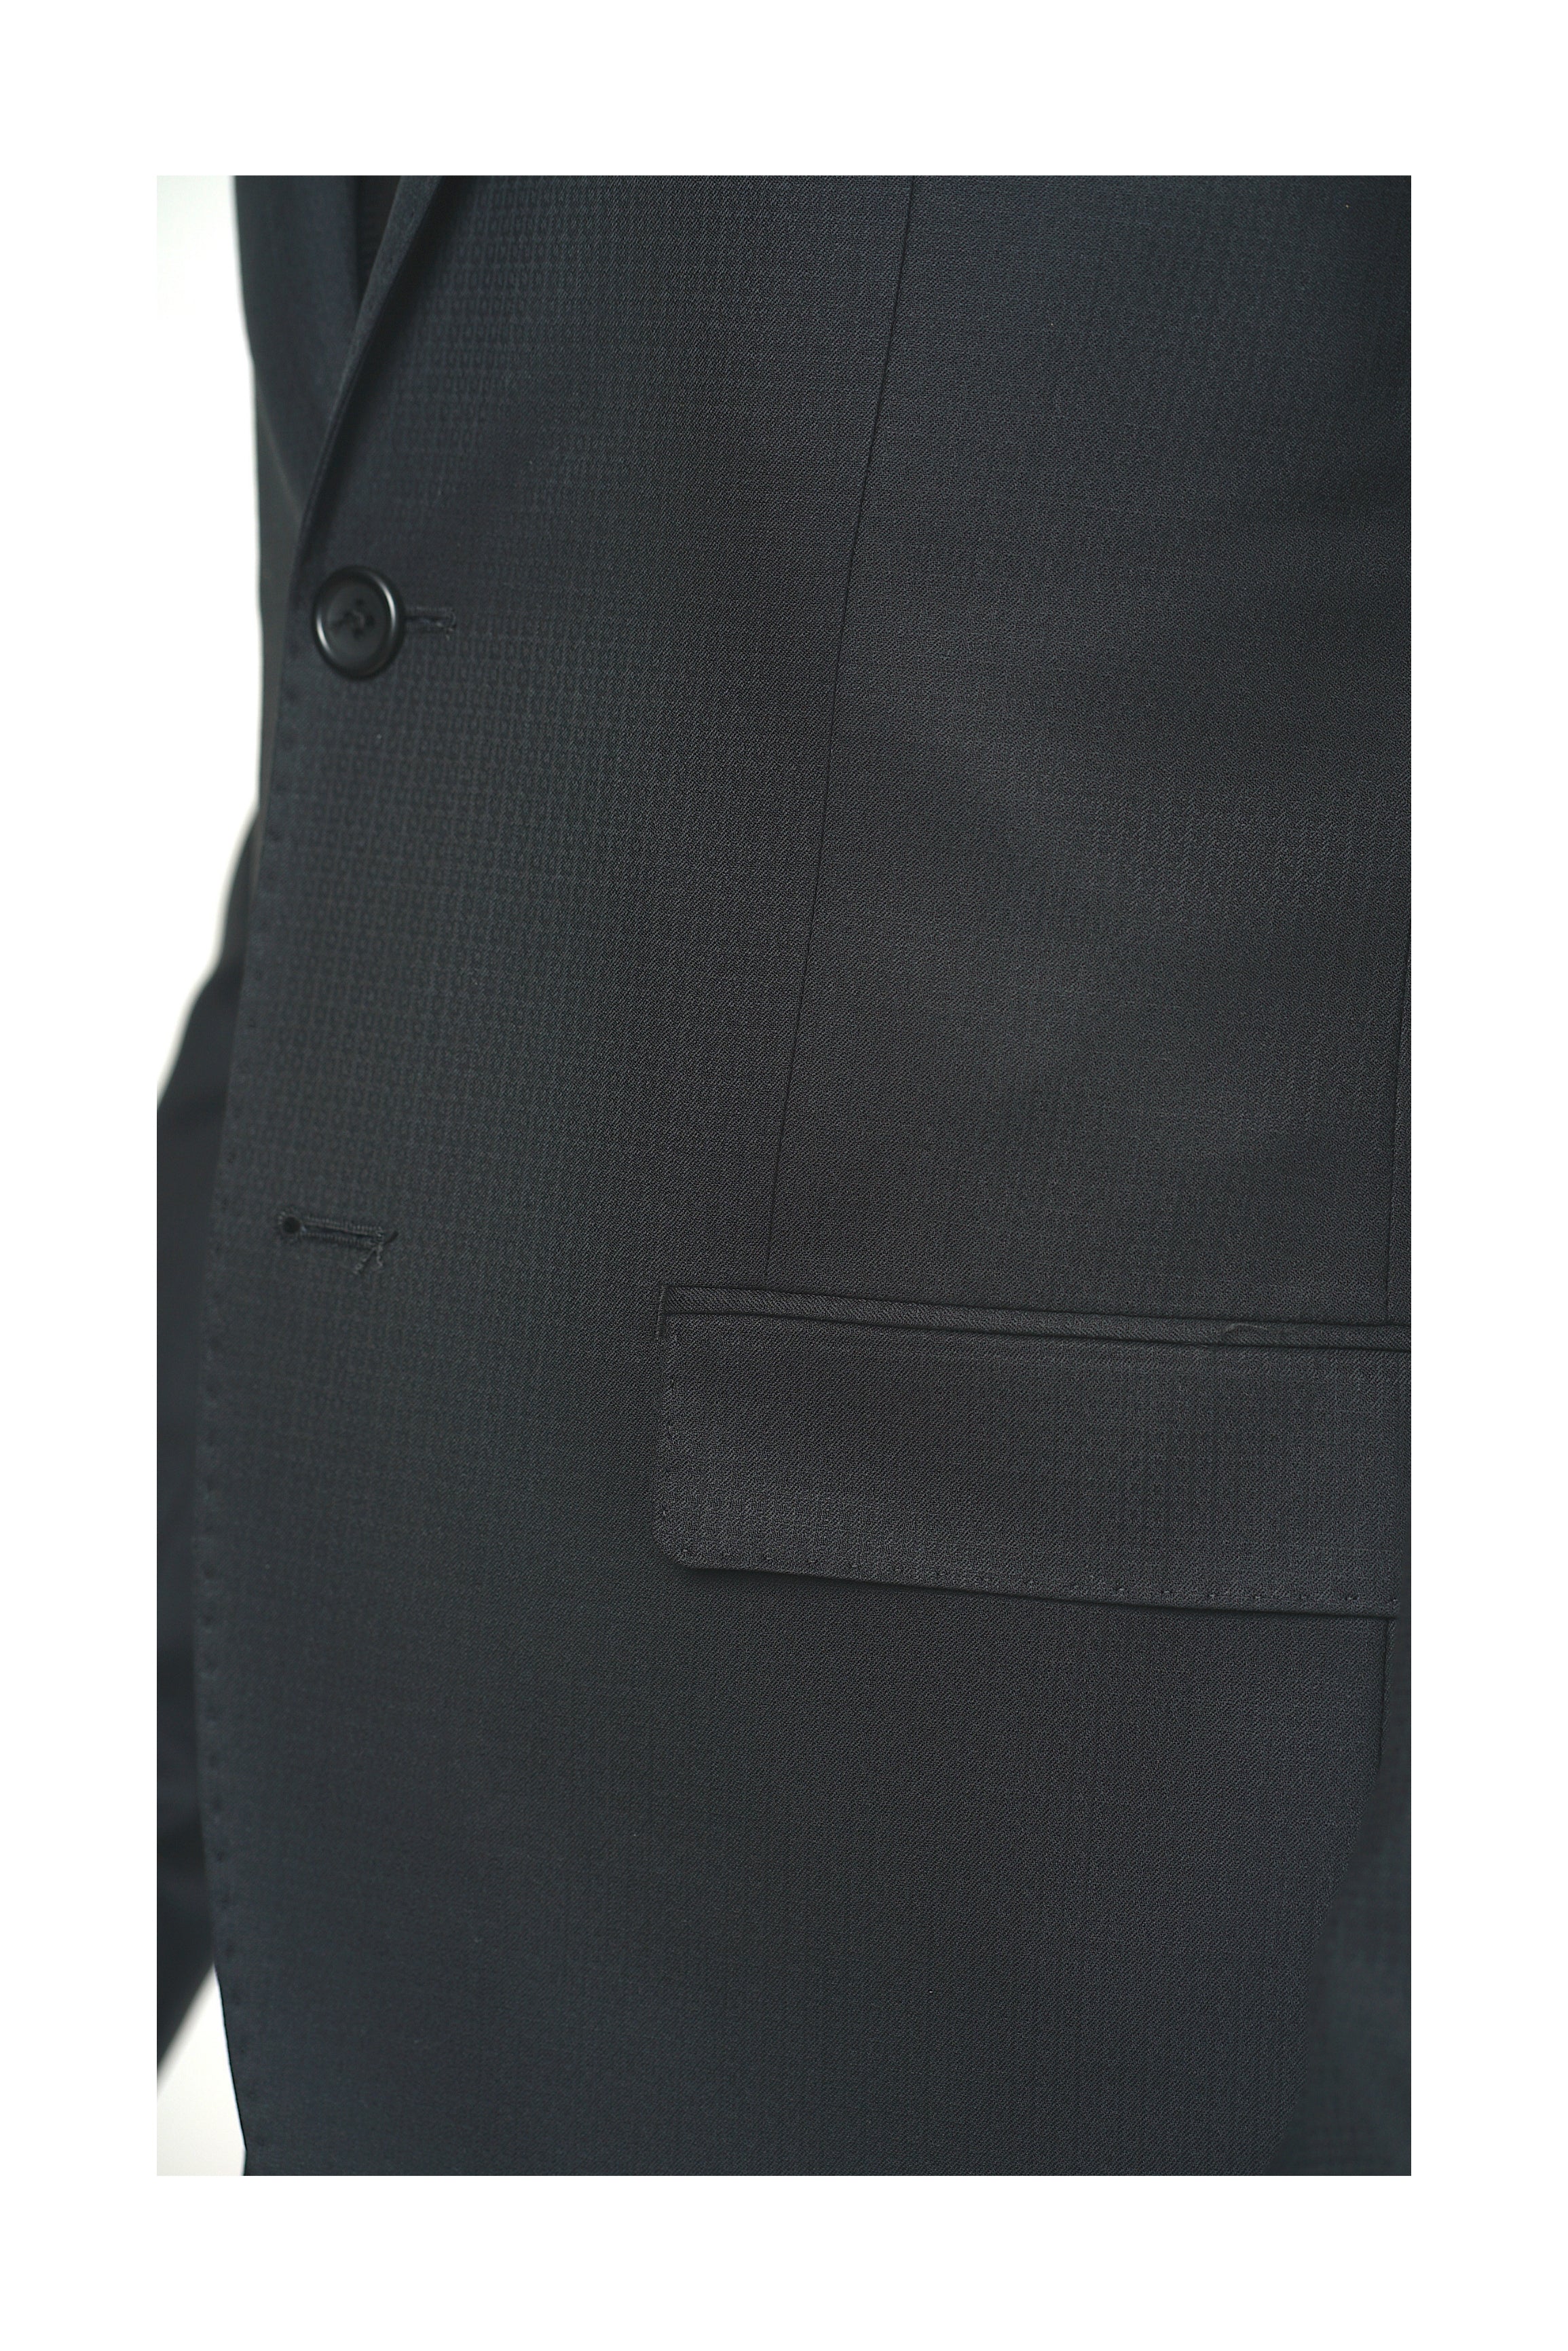 Lazarou Slim Fit Black Suit - Mastroianni Fashions